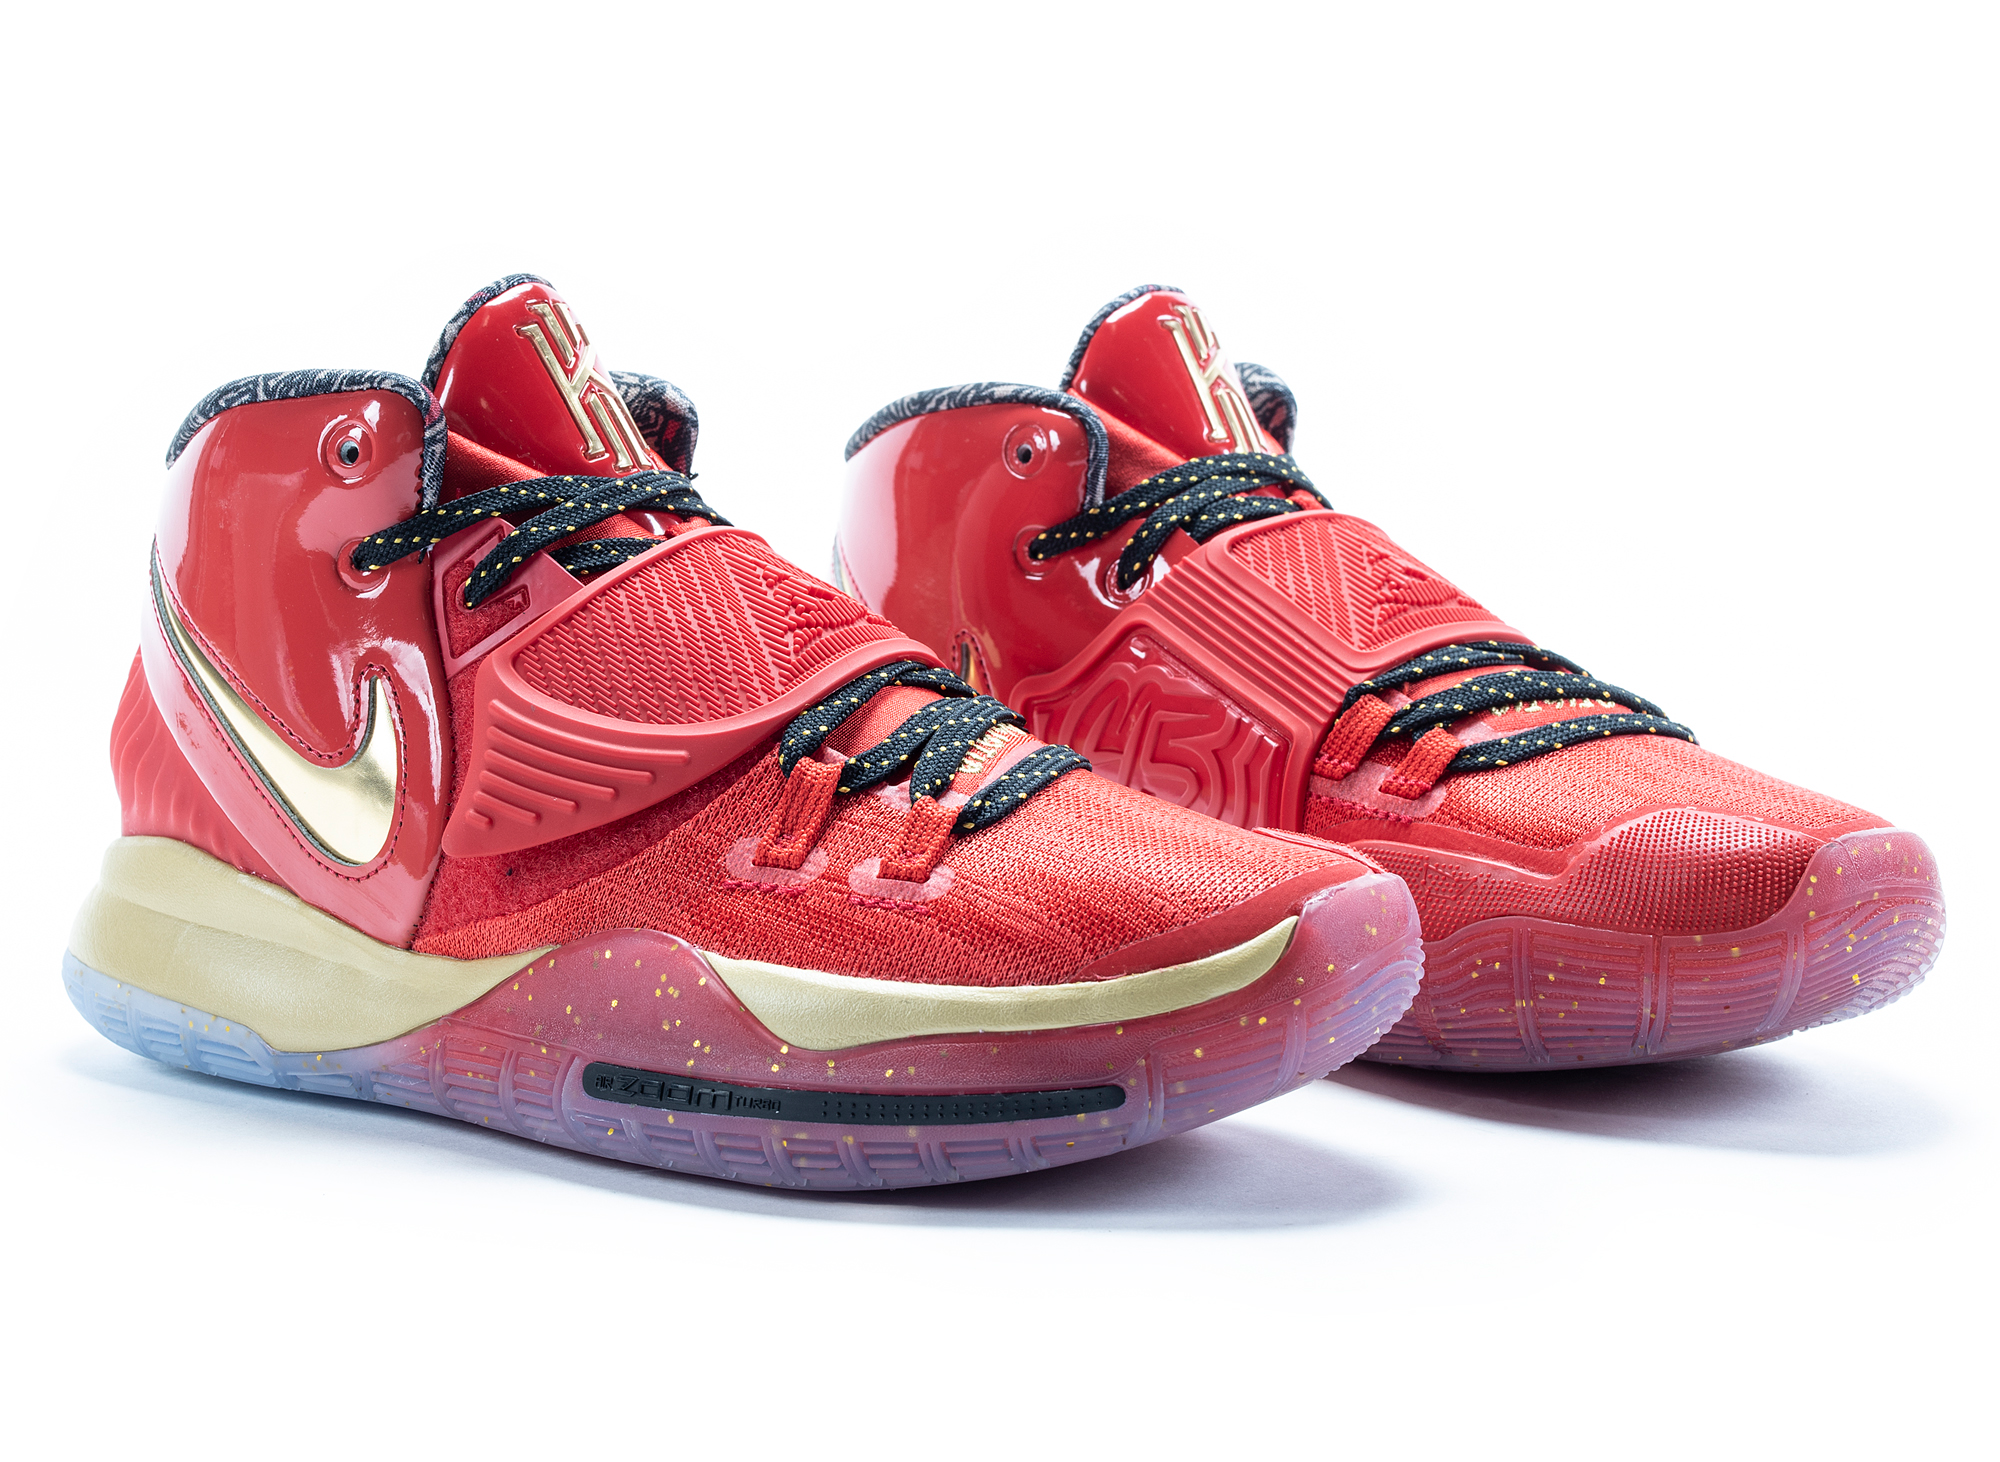 Nike Kyrie 6 Preheat Houston Basketball Sneakers Reviews